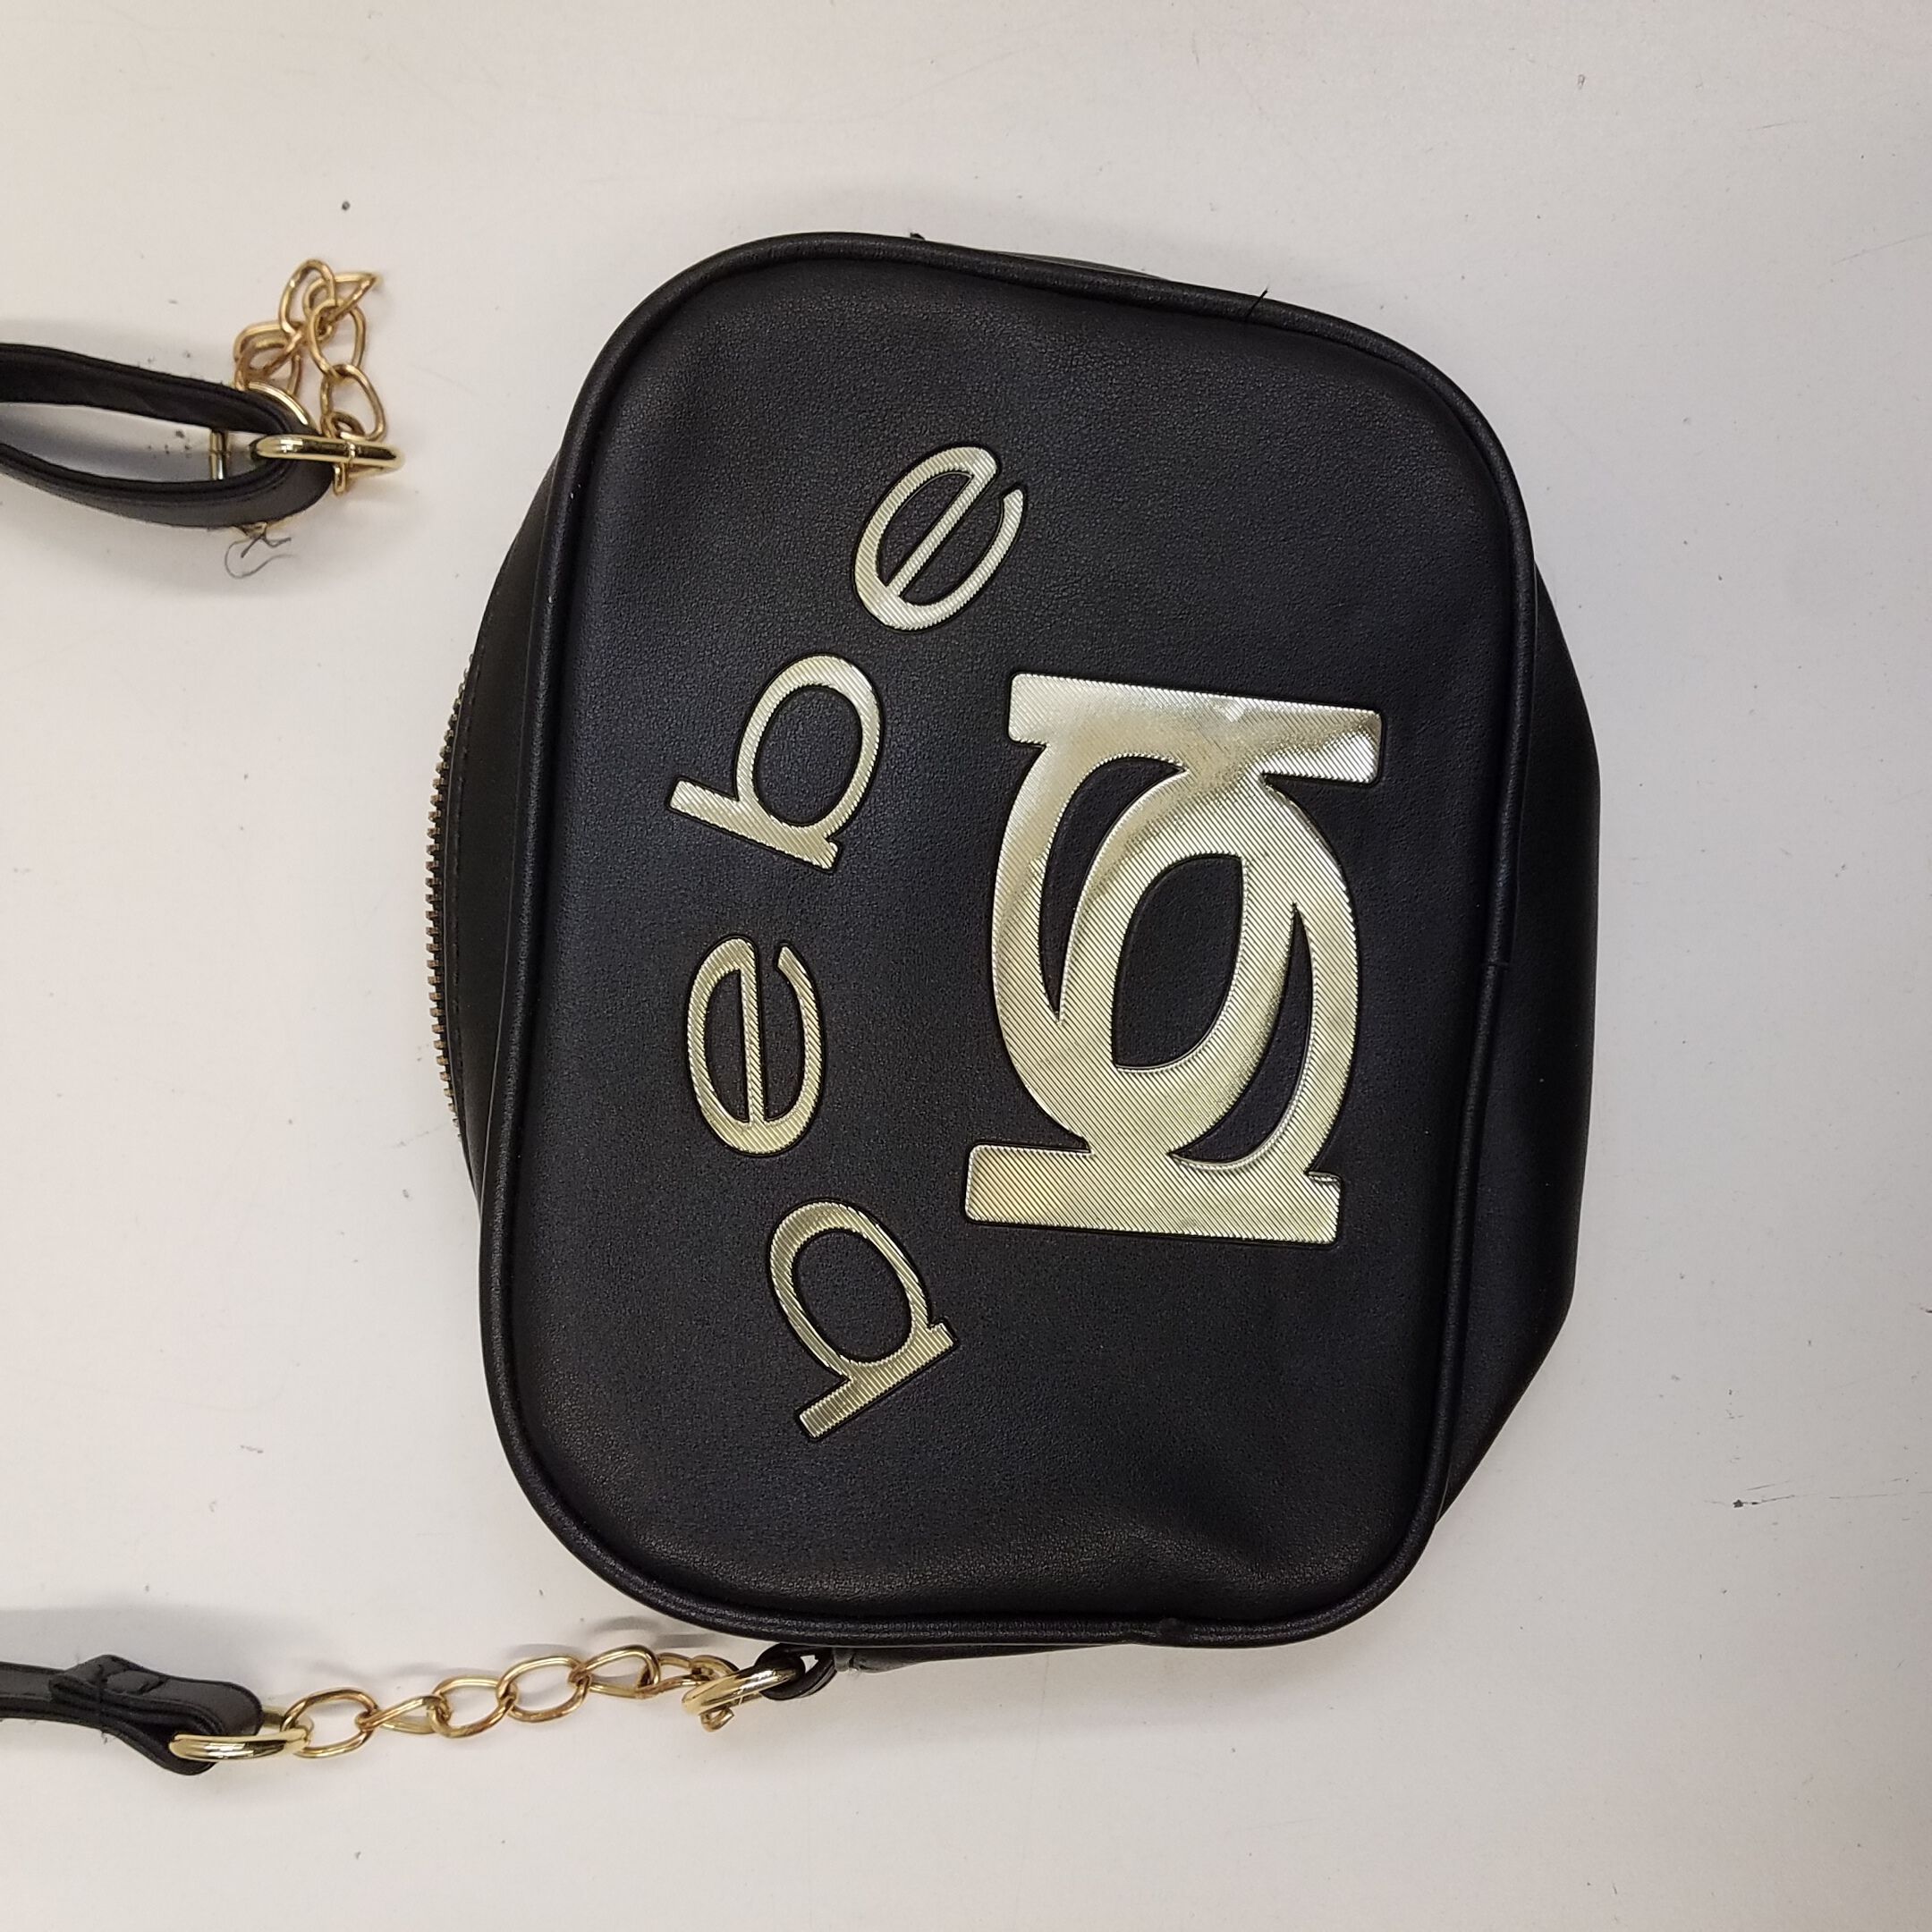 BEBE LOS ANGELES ladies black faux leather Tote bag £8.00 - PicClick UK